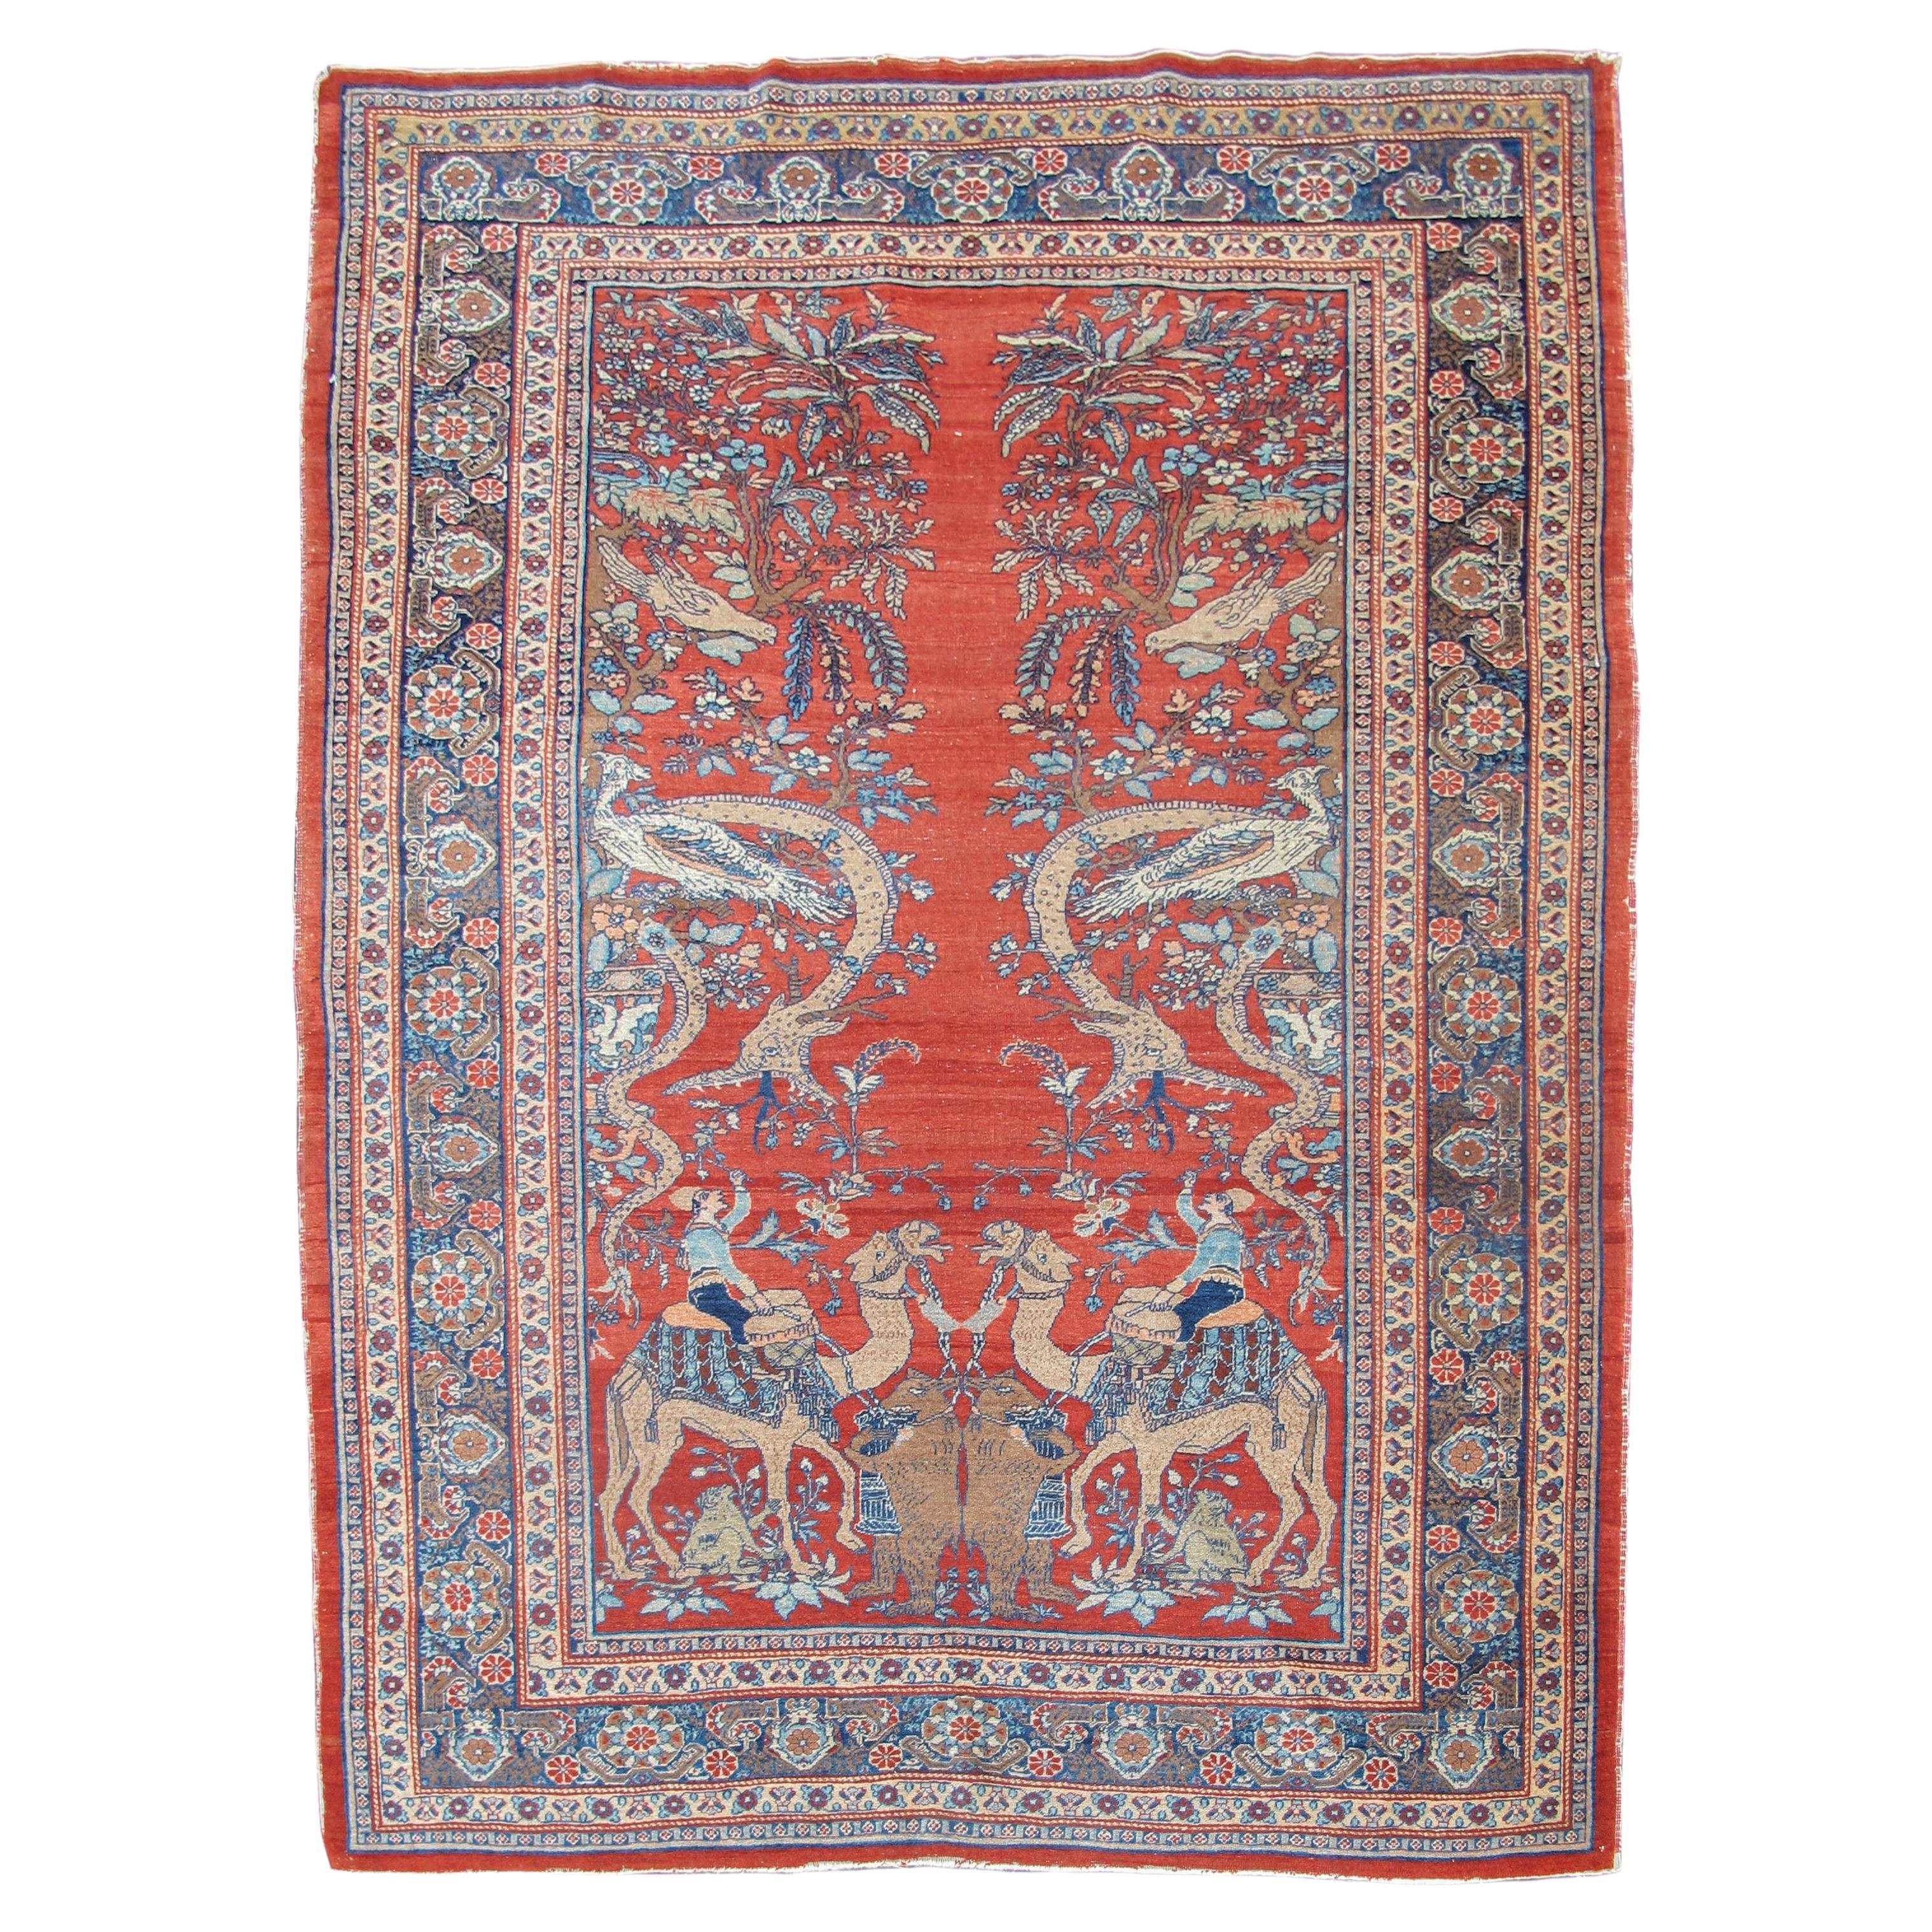 Antique Persian Tabriz Rug, 19th Century